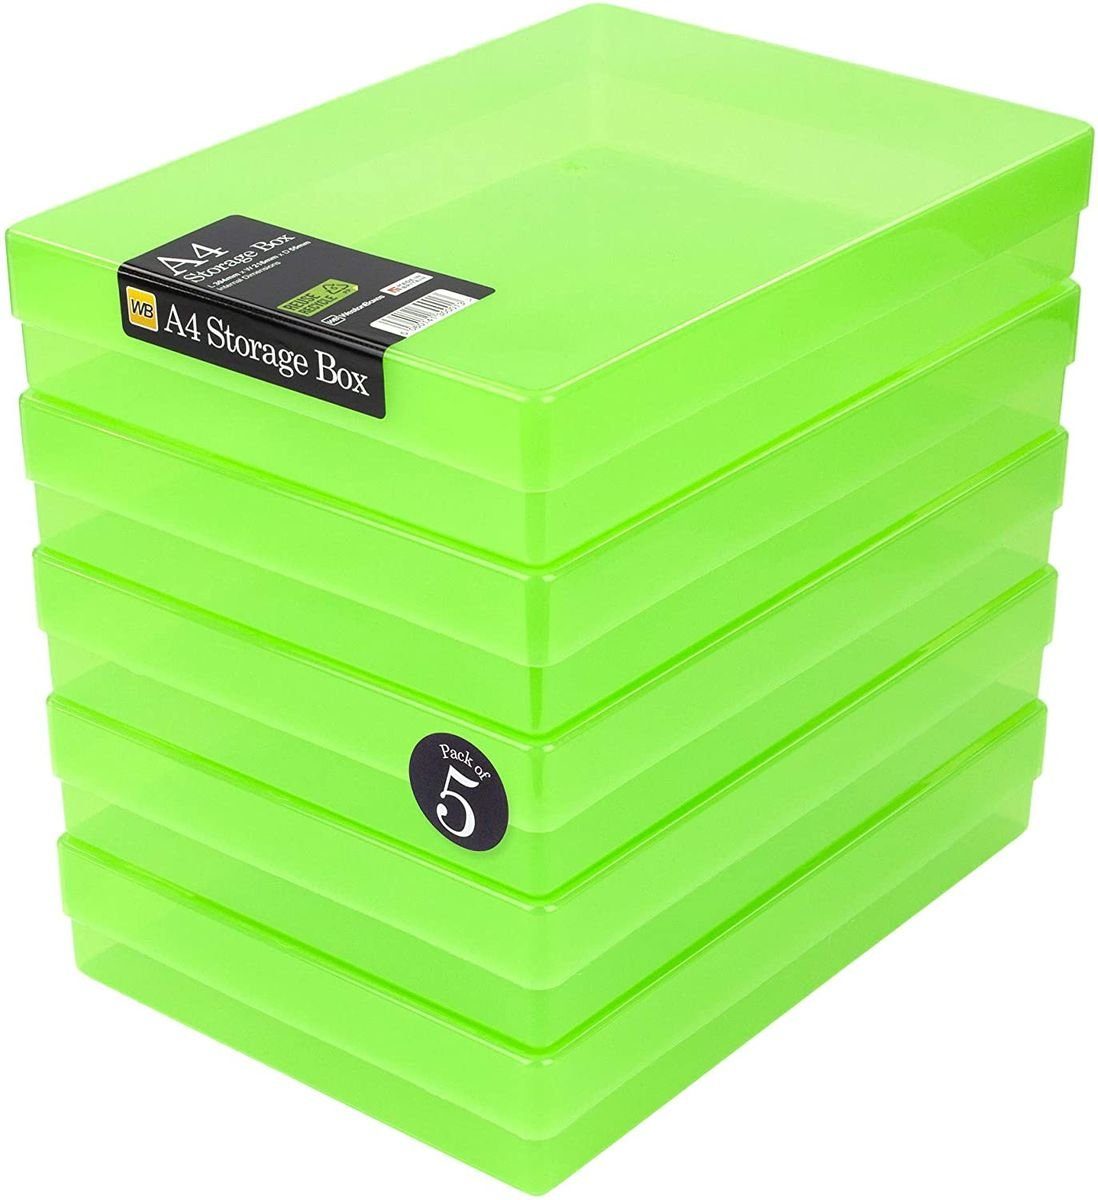 WestonBoxes Aufbewahrungsbox Variocolors A4 Aufbewahrungsbox grün transparent 312x225x57mm